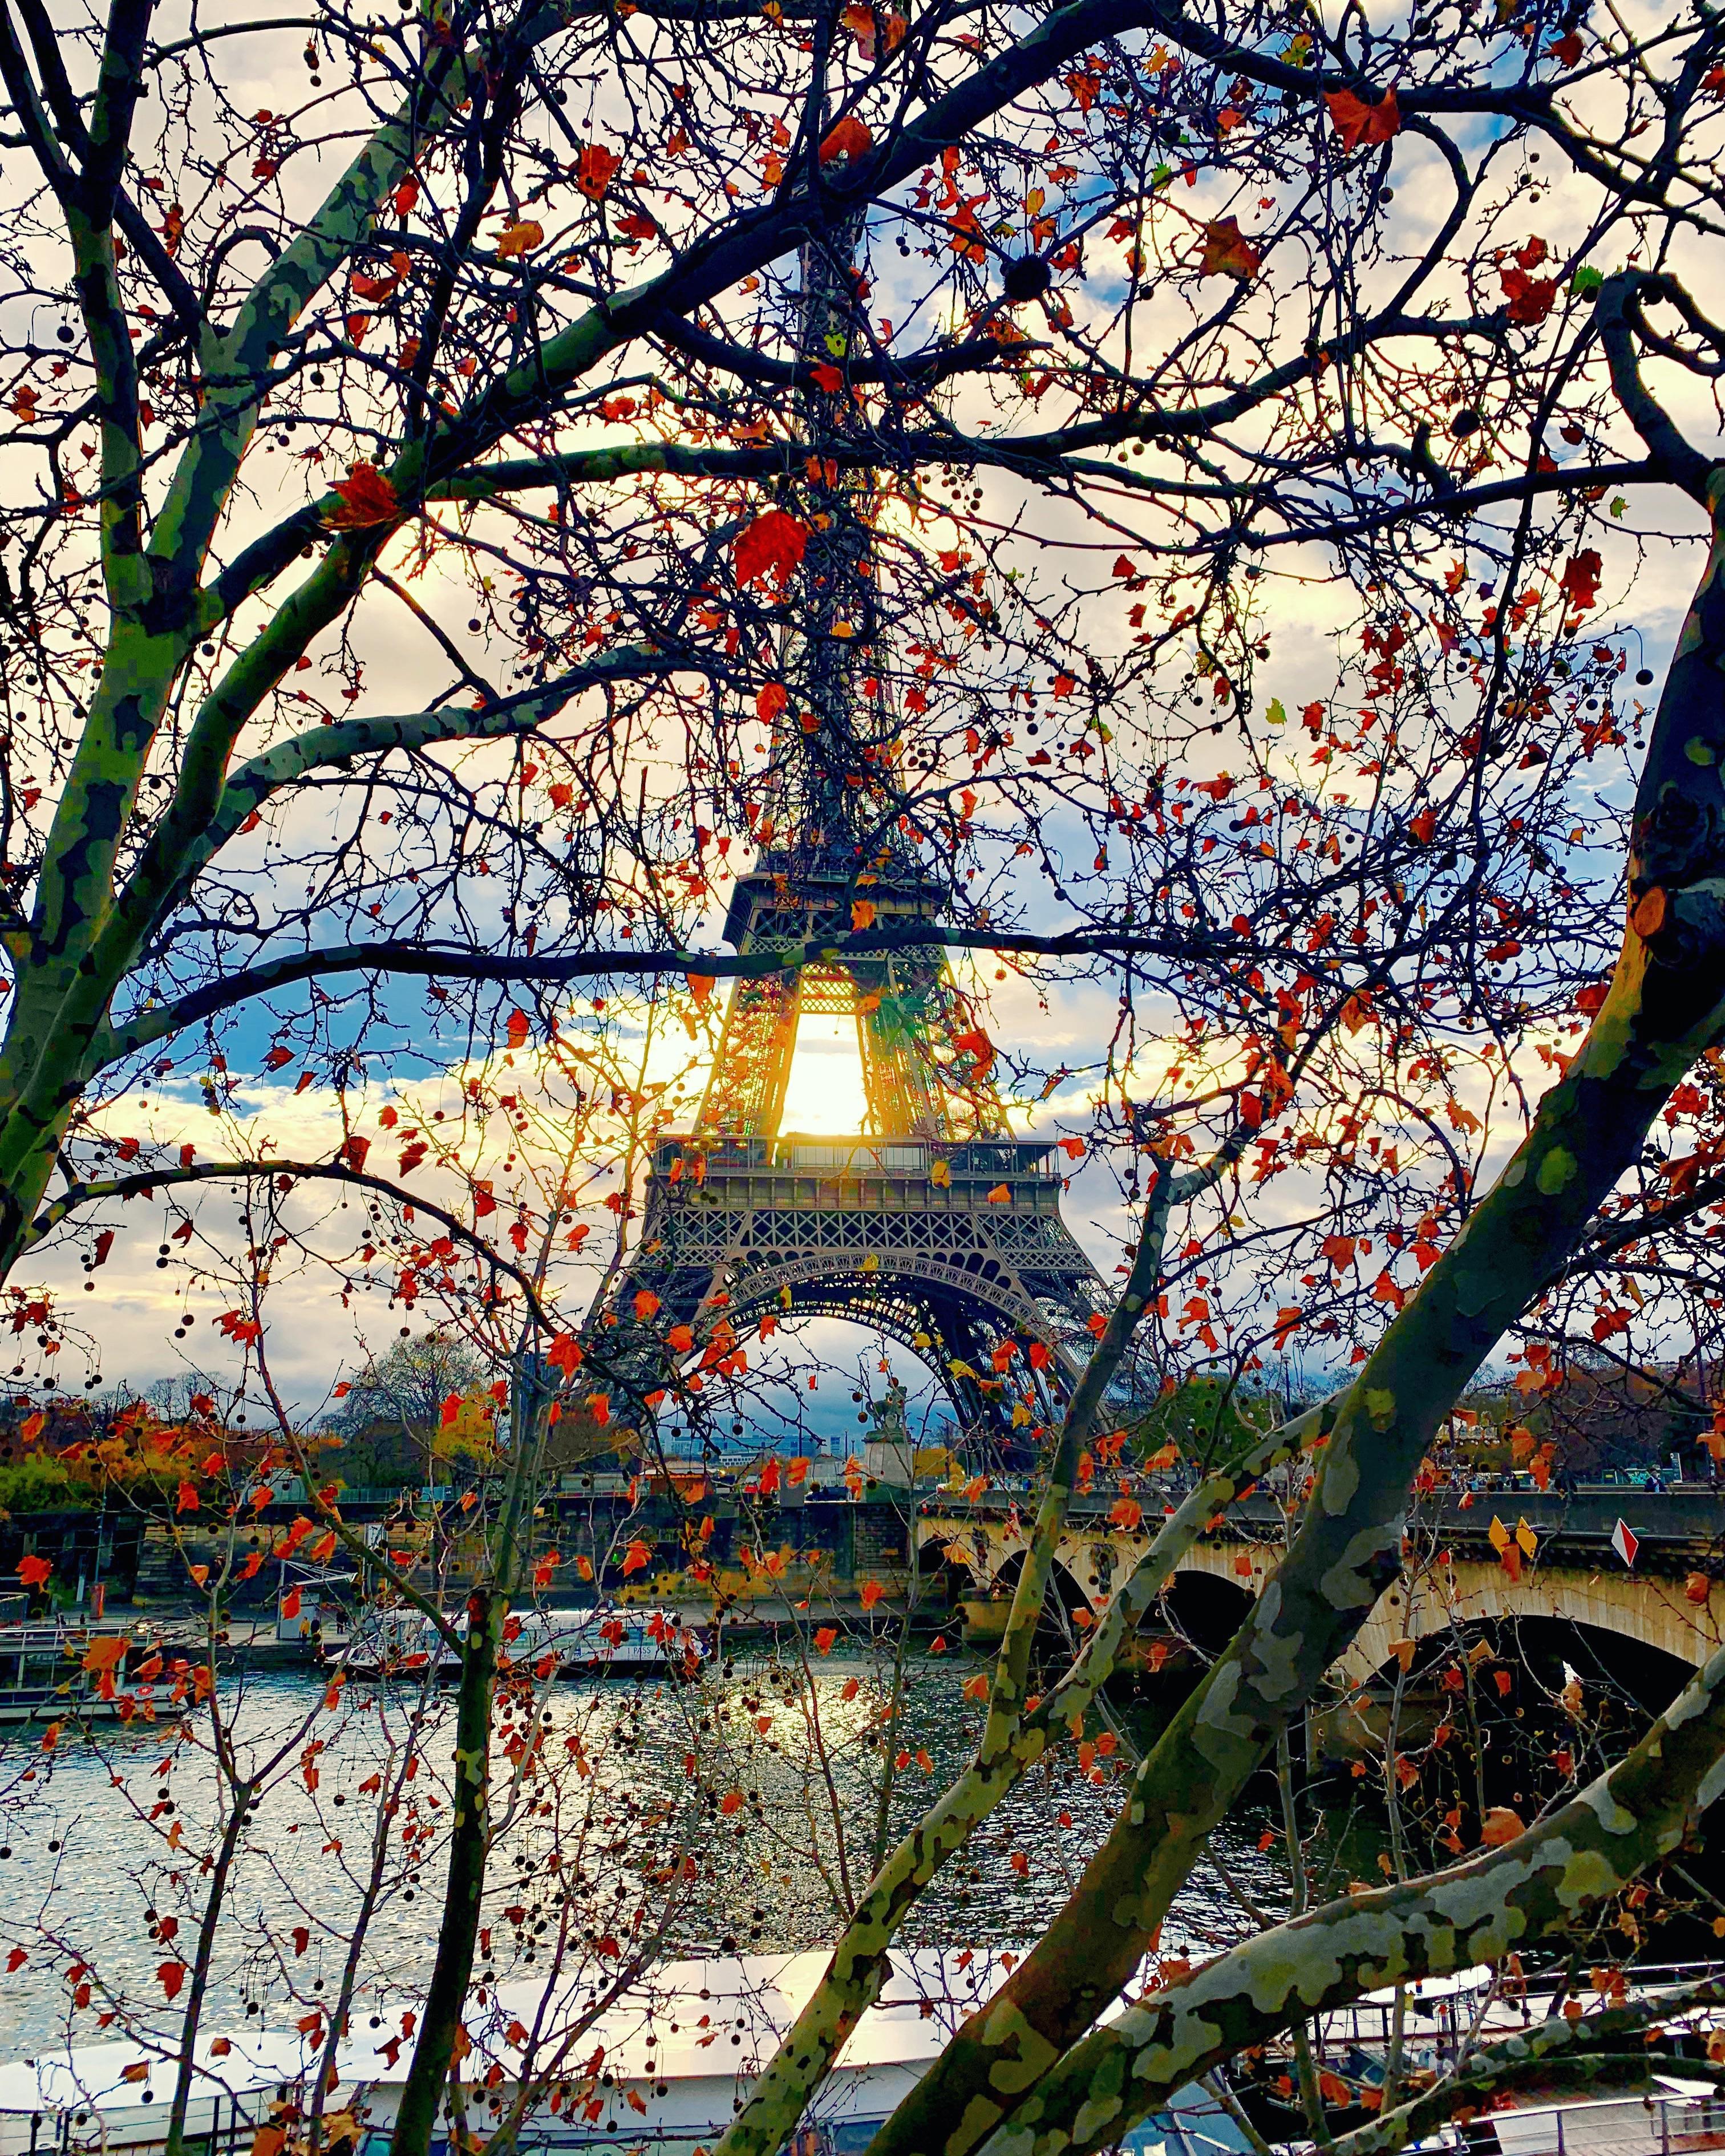 Sunrise + Autumn + iPhone XS Max + Snapseed + Paris = Wallpaper